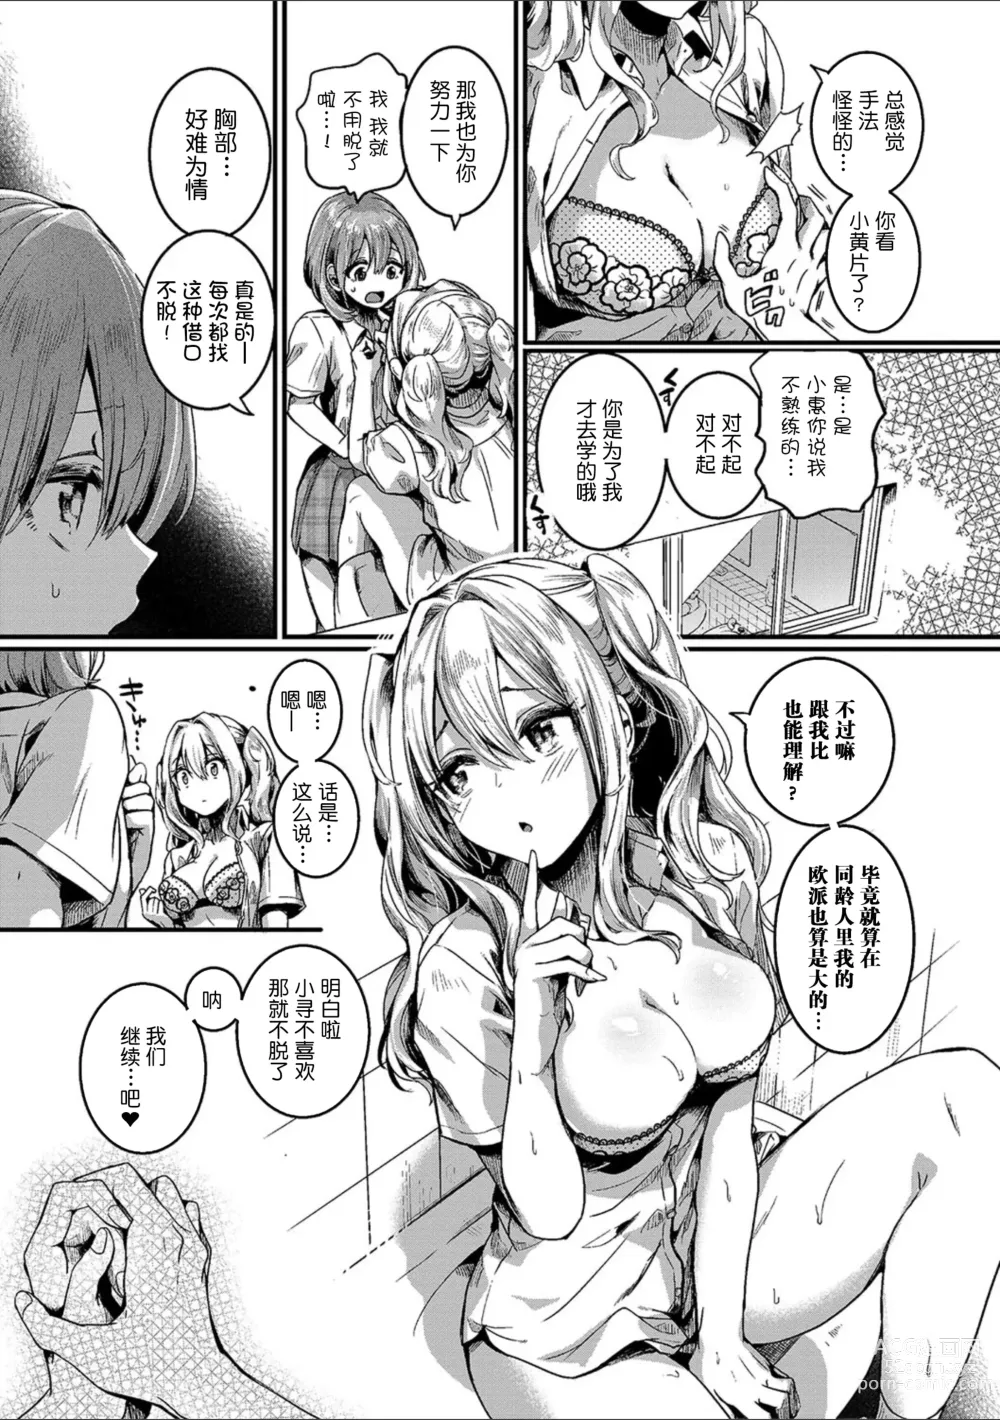 Page 12 of manga Watashi wa Onnanoko ga Suki datta Hazu nano ni - But I fell in with something different.